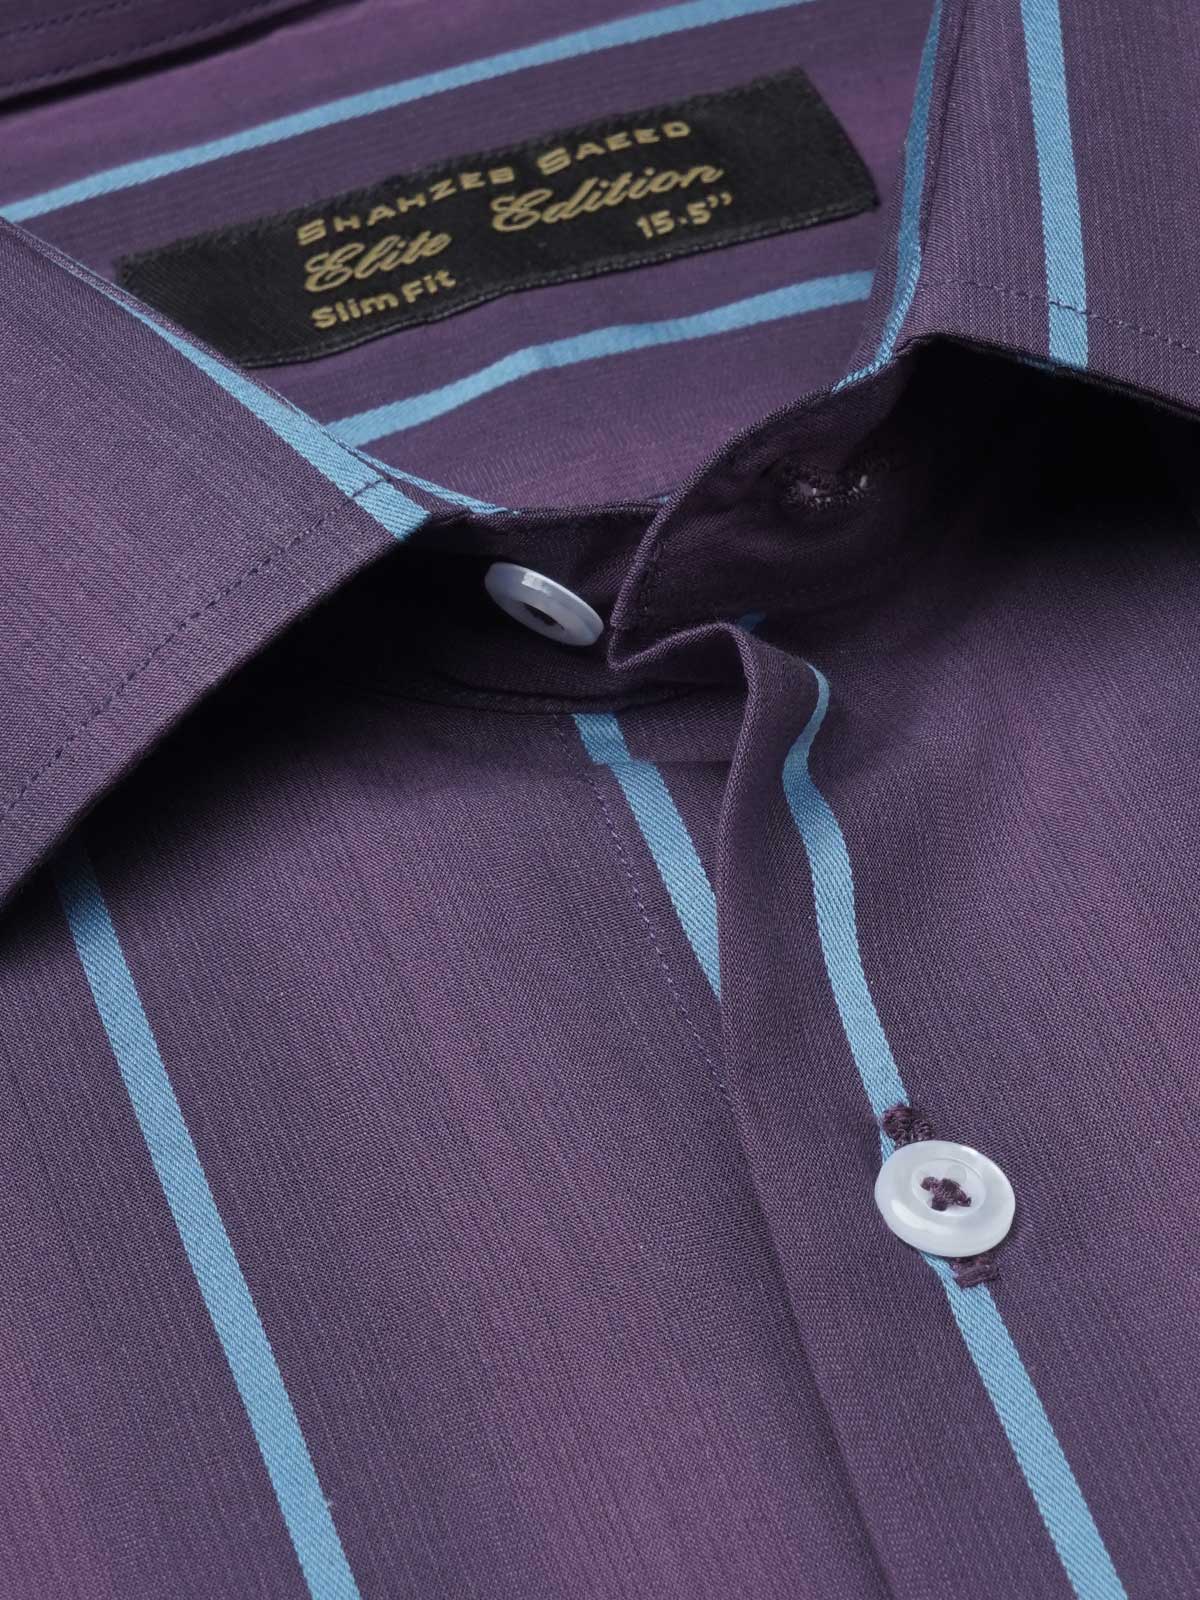 Purple Self Striped, Elite Edition, French Collar Men’s Formal Shirt (FS-1093)